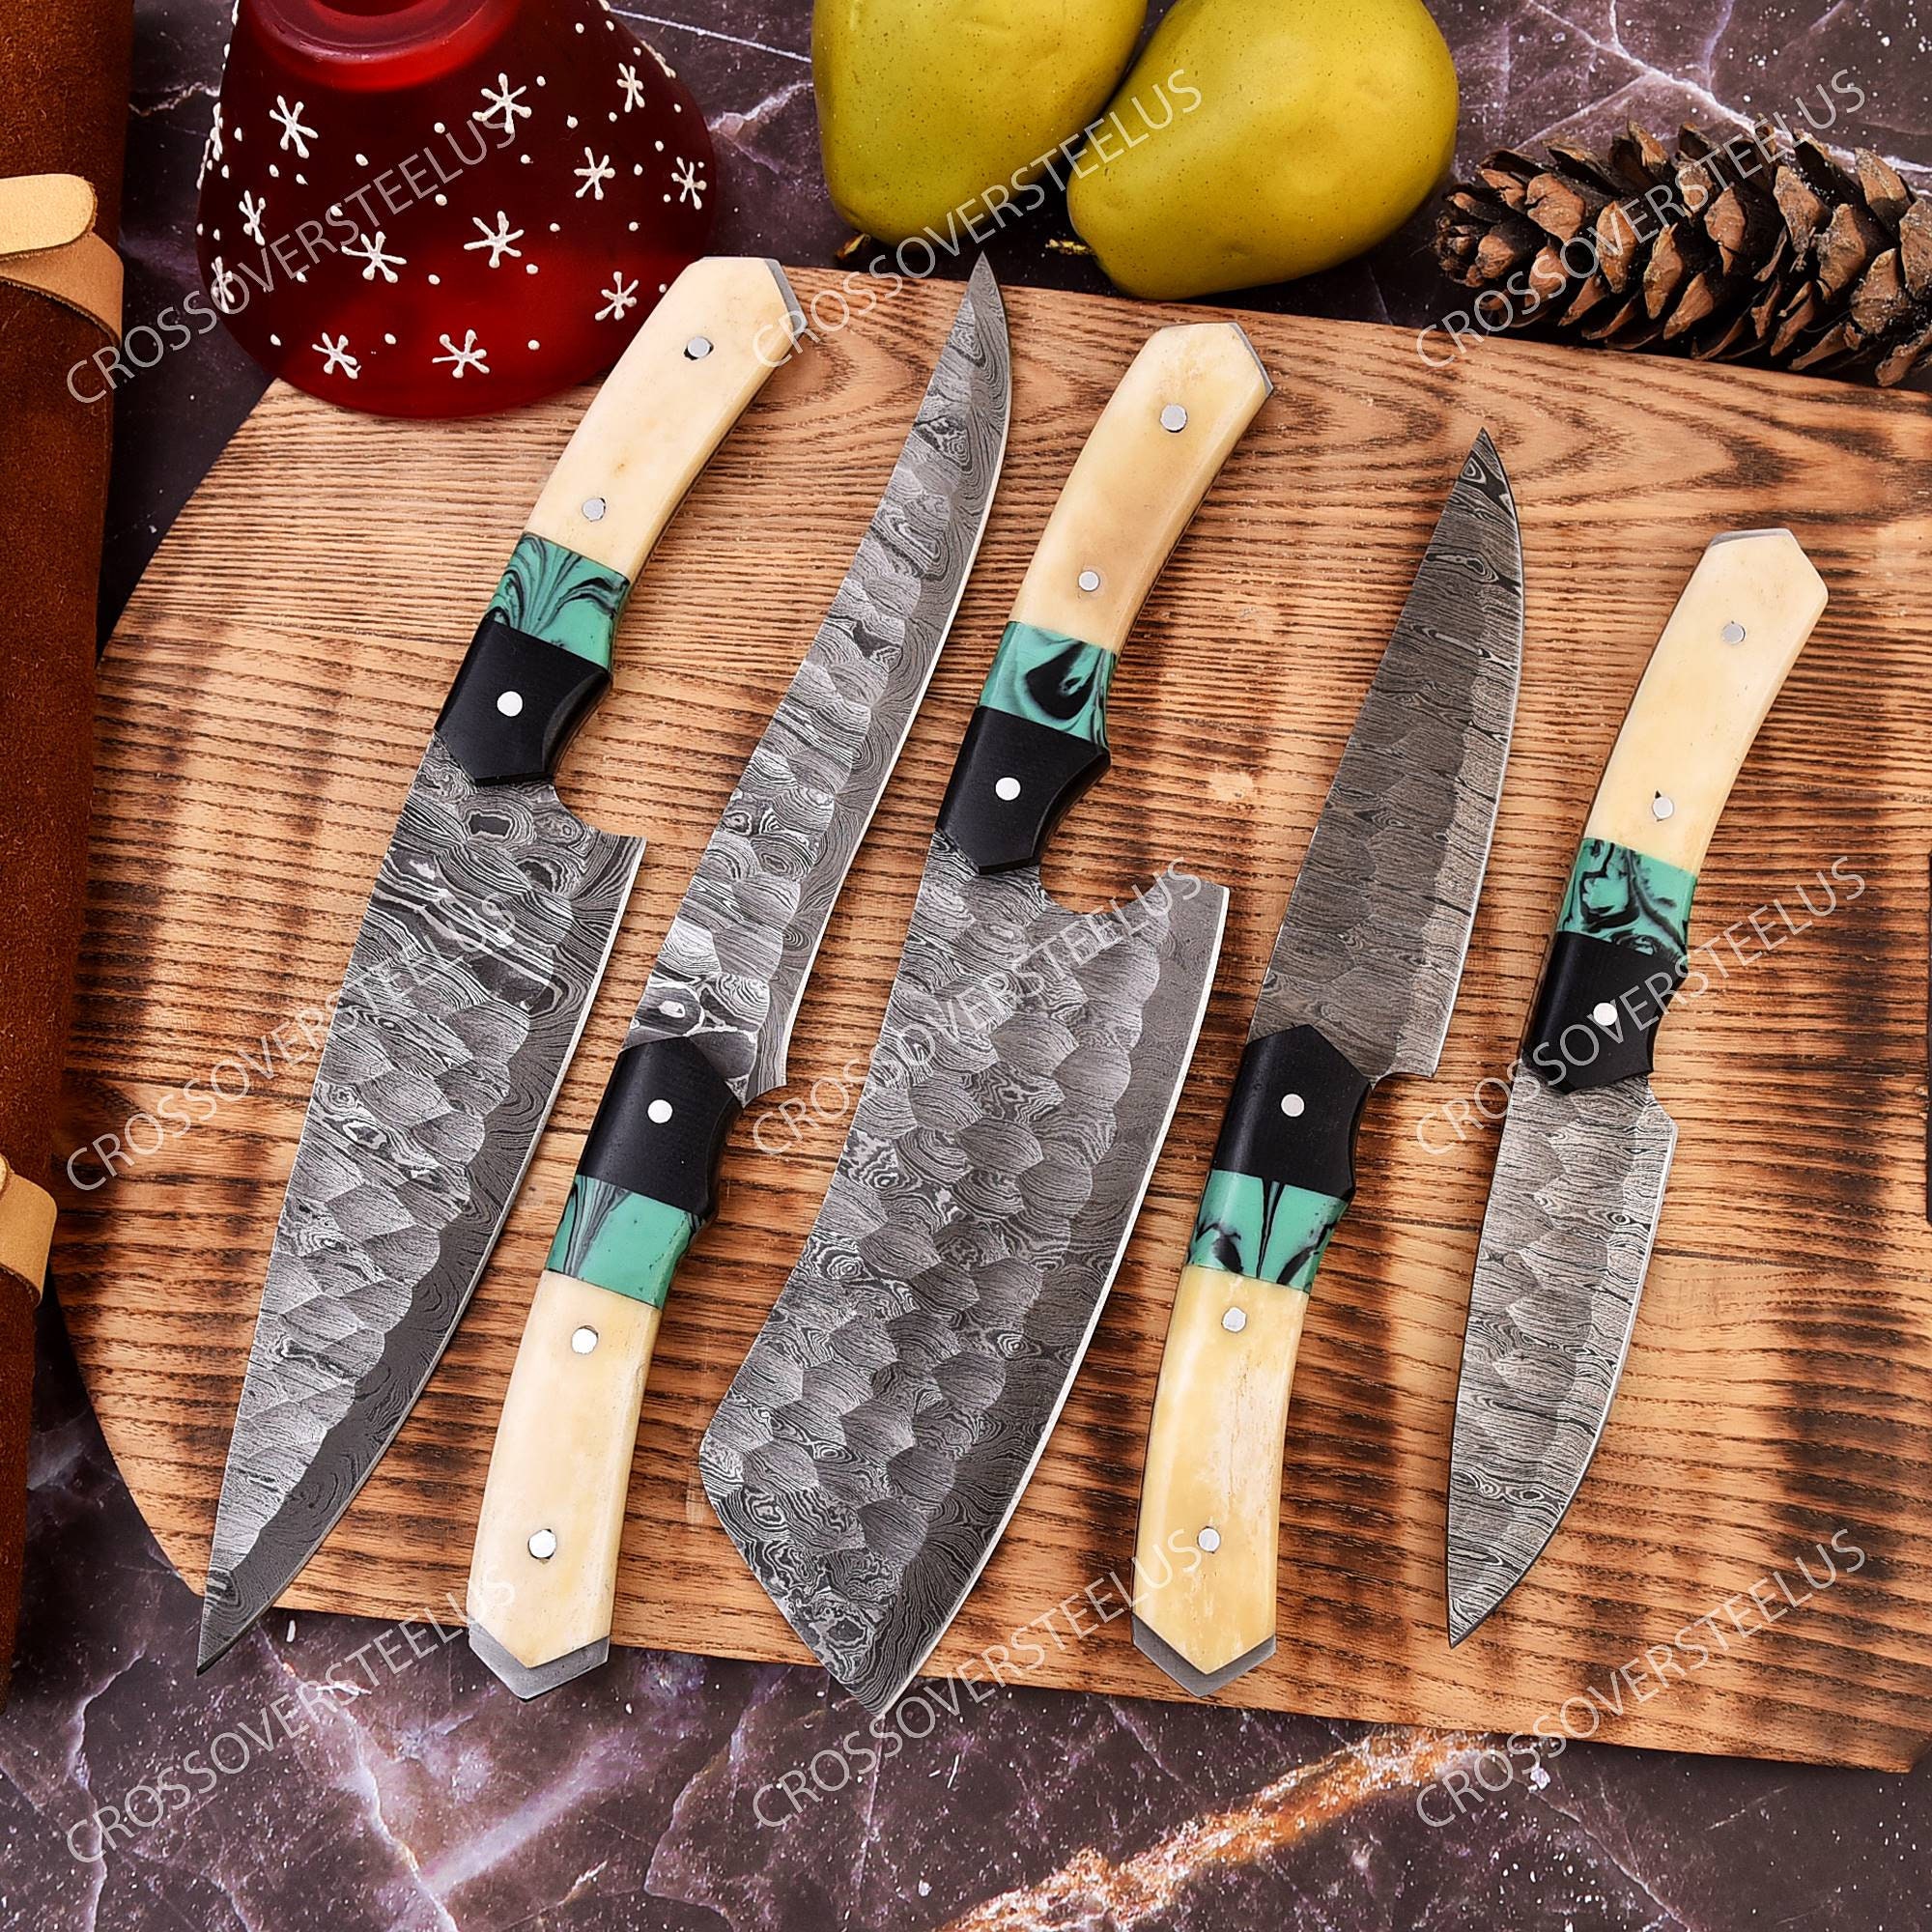  Spartan Knife Block- Complete Damascus Style Knife Set